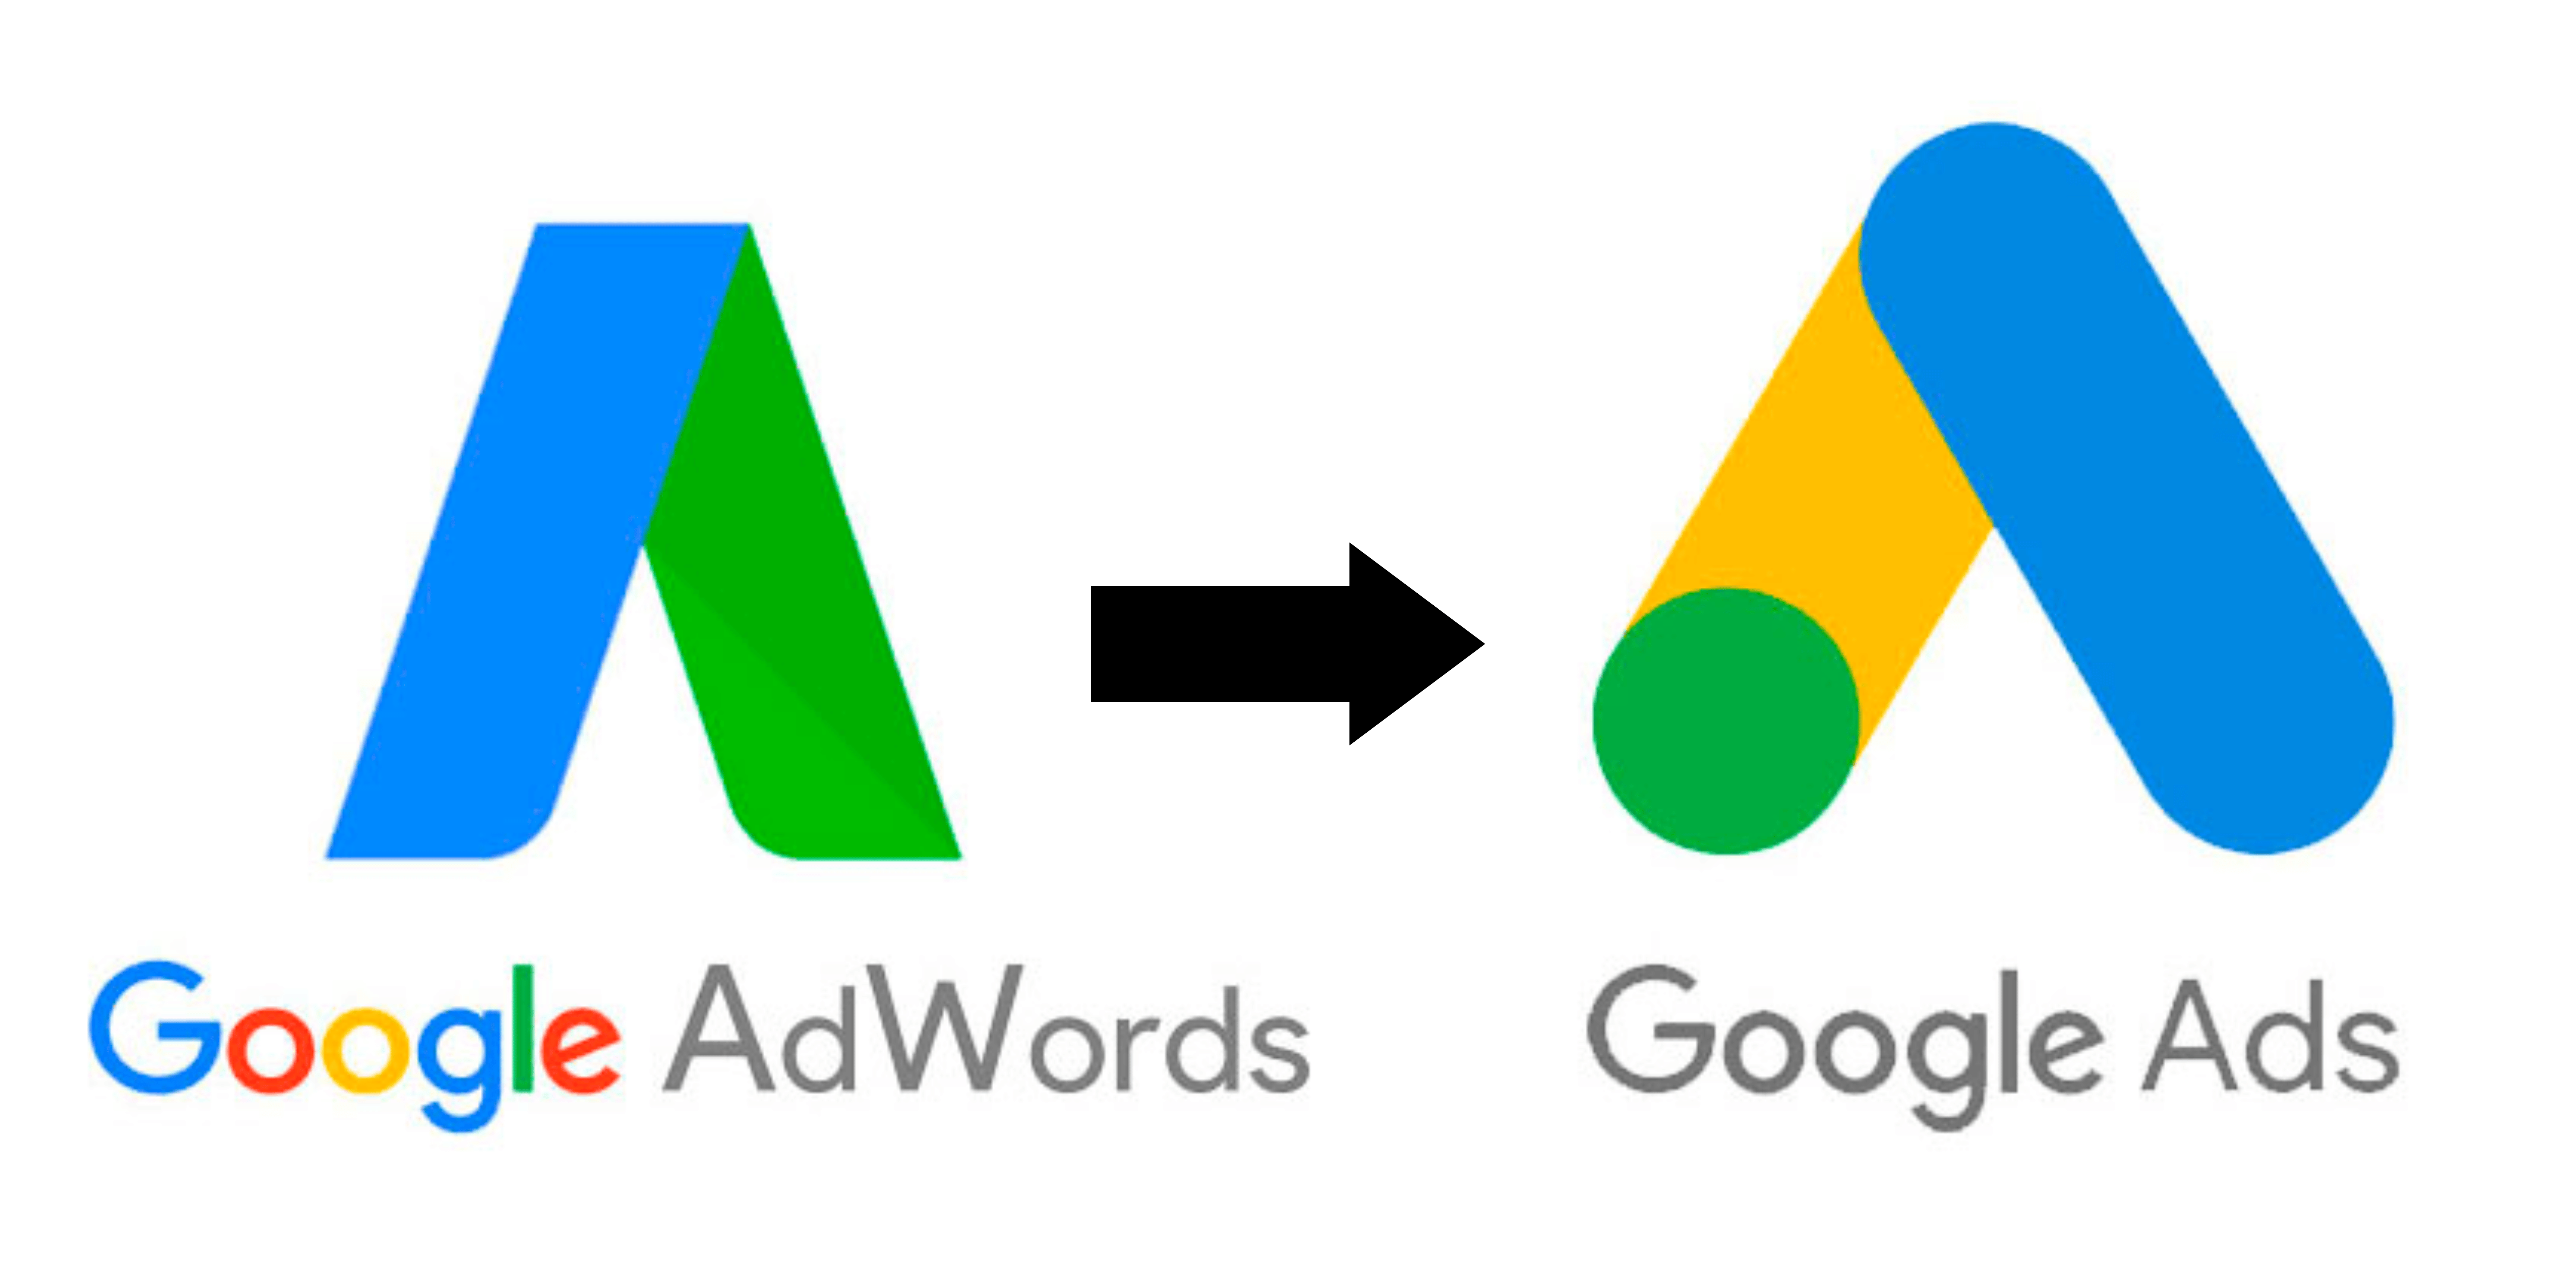 Evolution of Google Ads